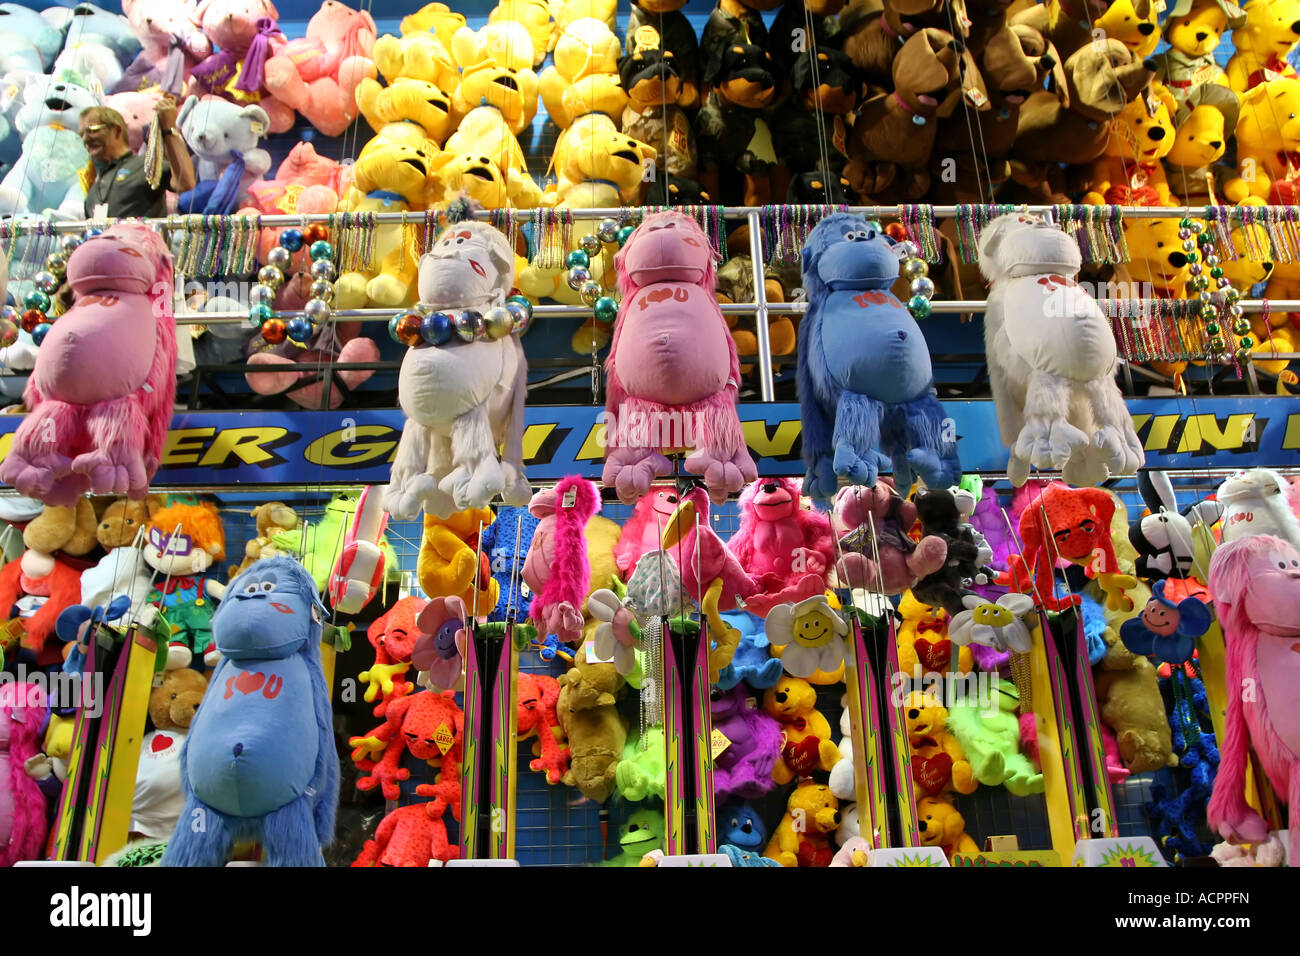 carnival prizes stuffed animals